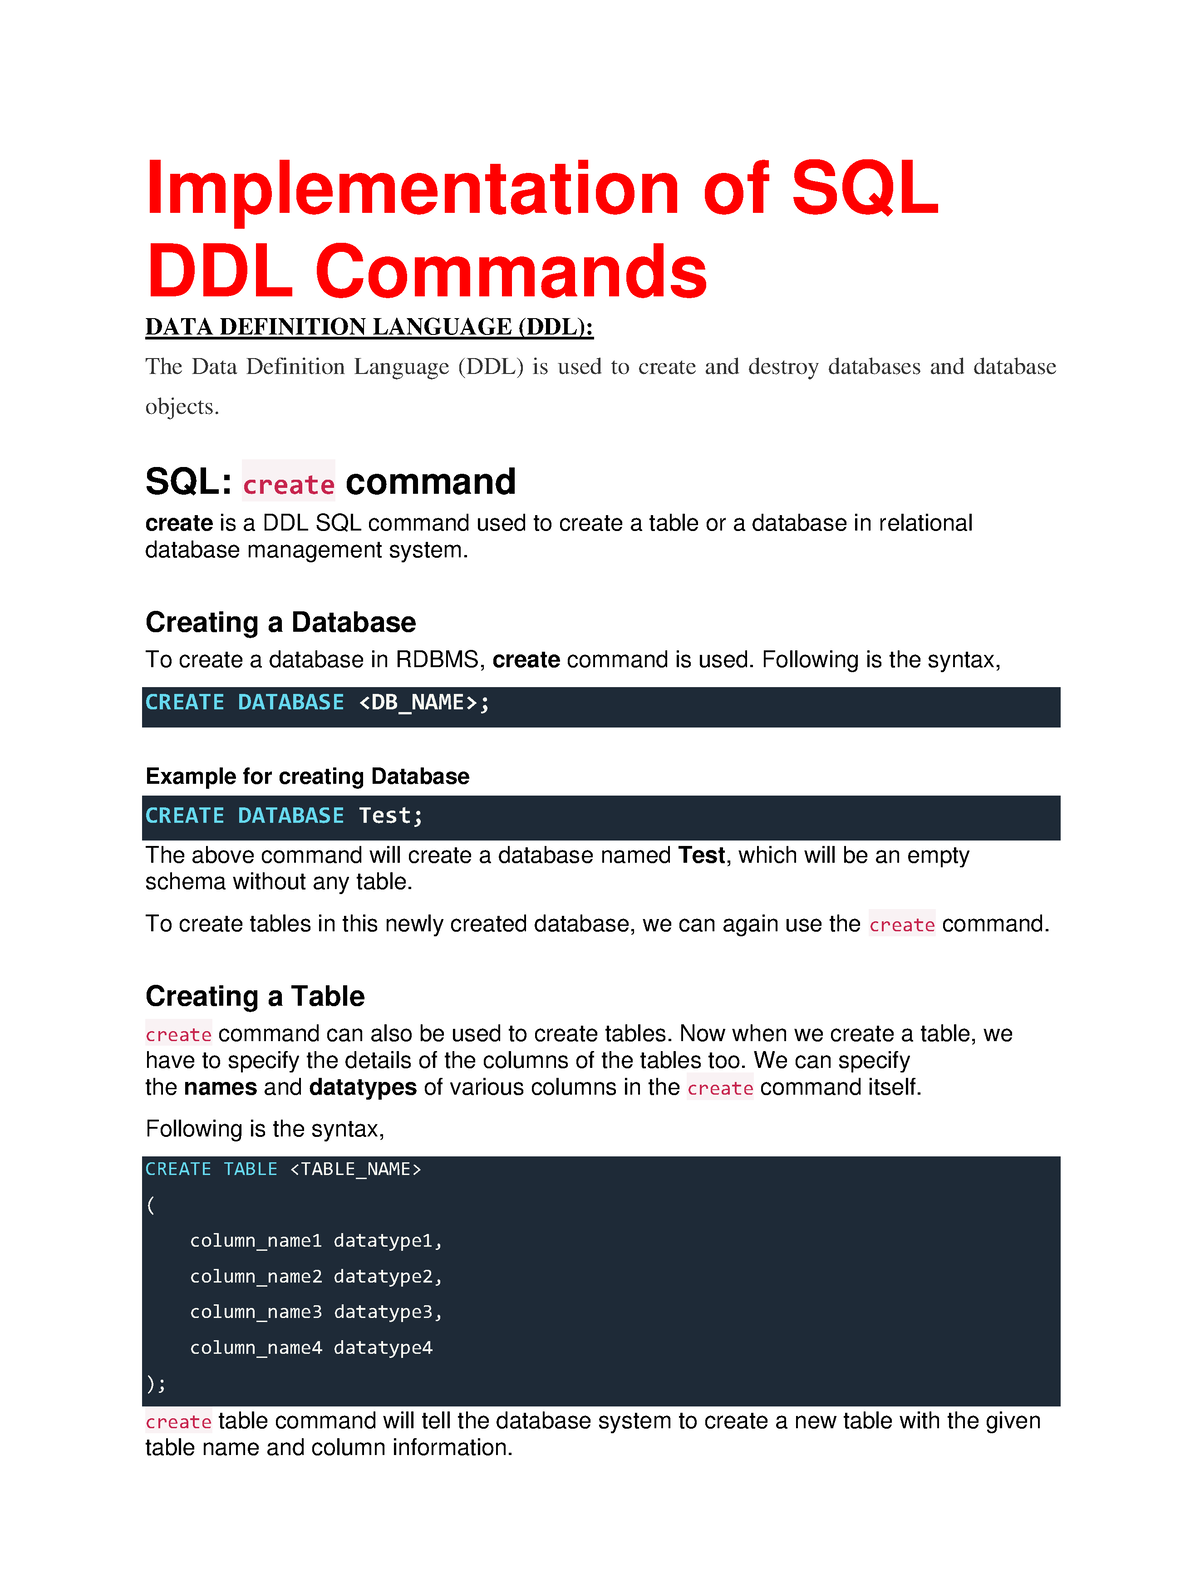 DDL Commands Lecture Notes Implementation of SQL DDL Commands DATA